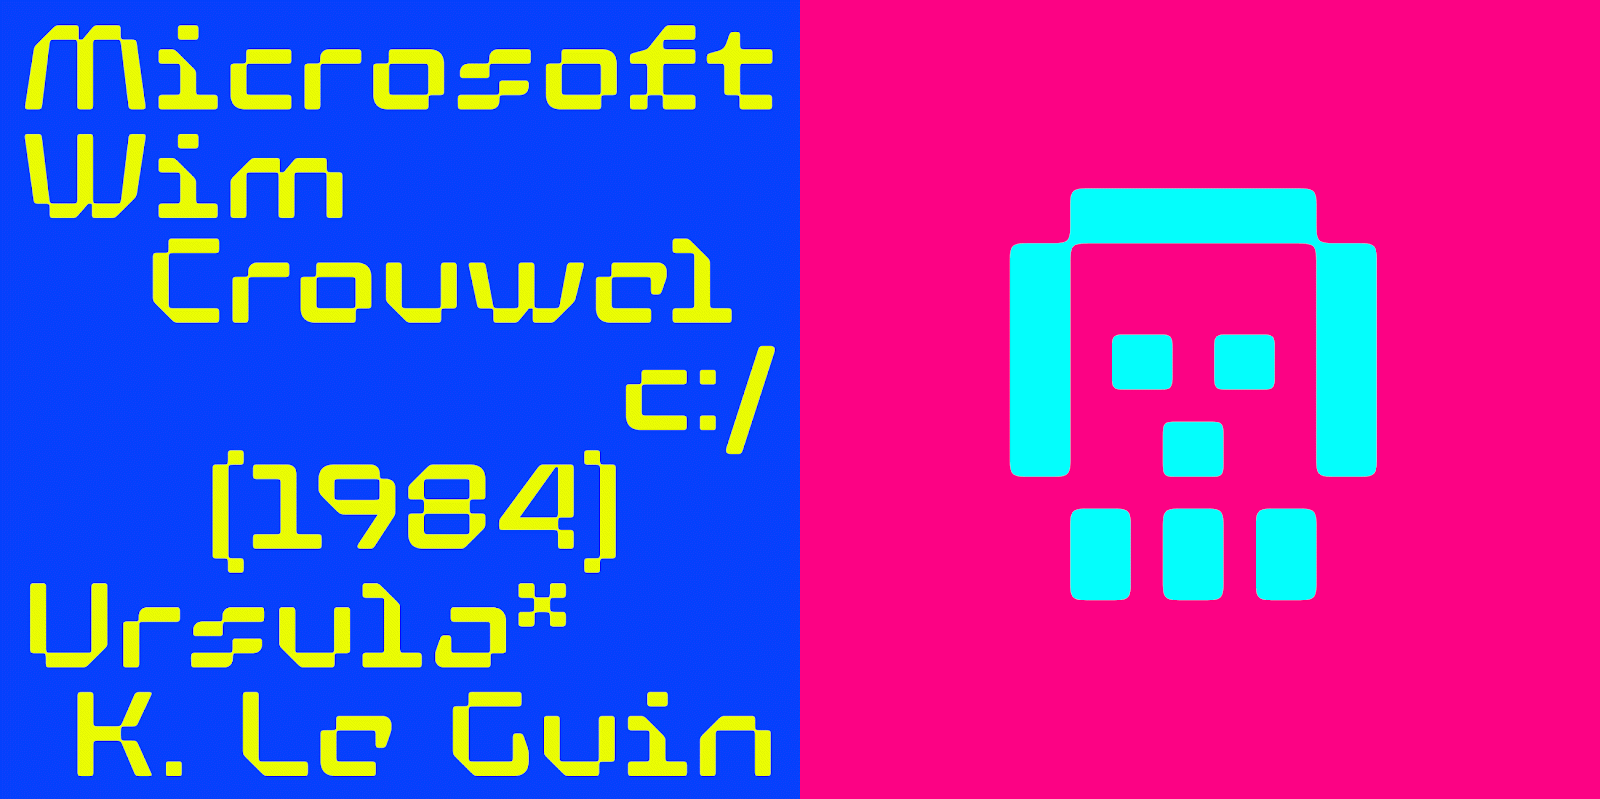 Amiga A Contemporary 80s Pixel Fonts Using Color Font Technology